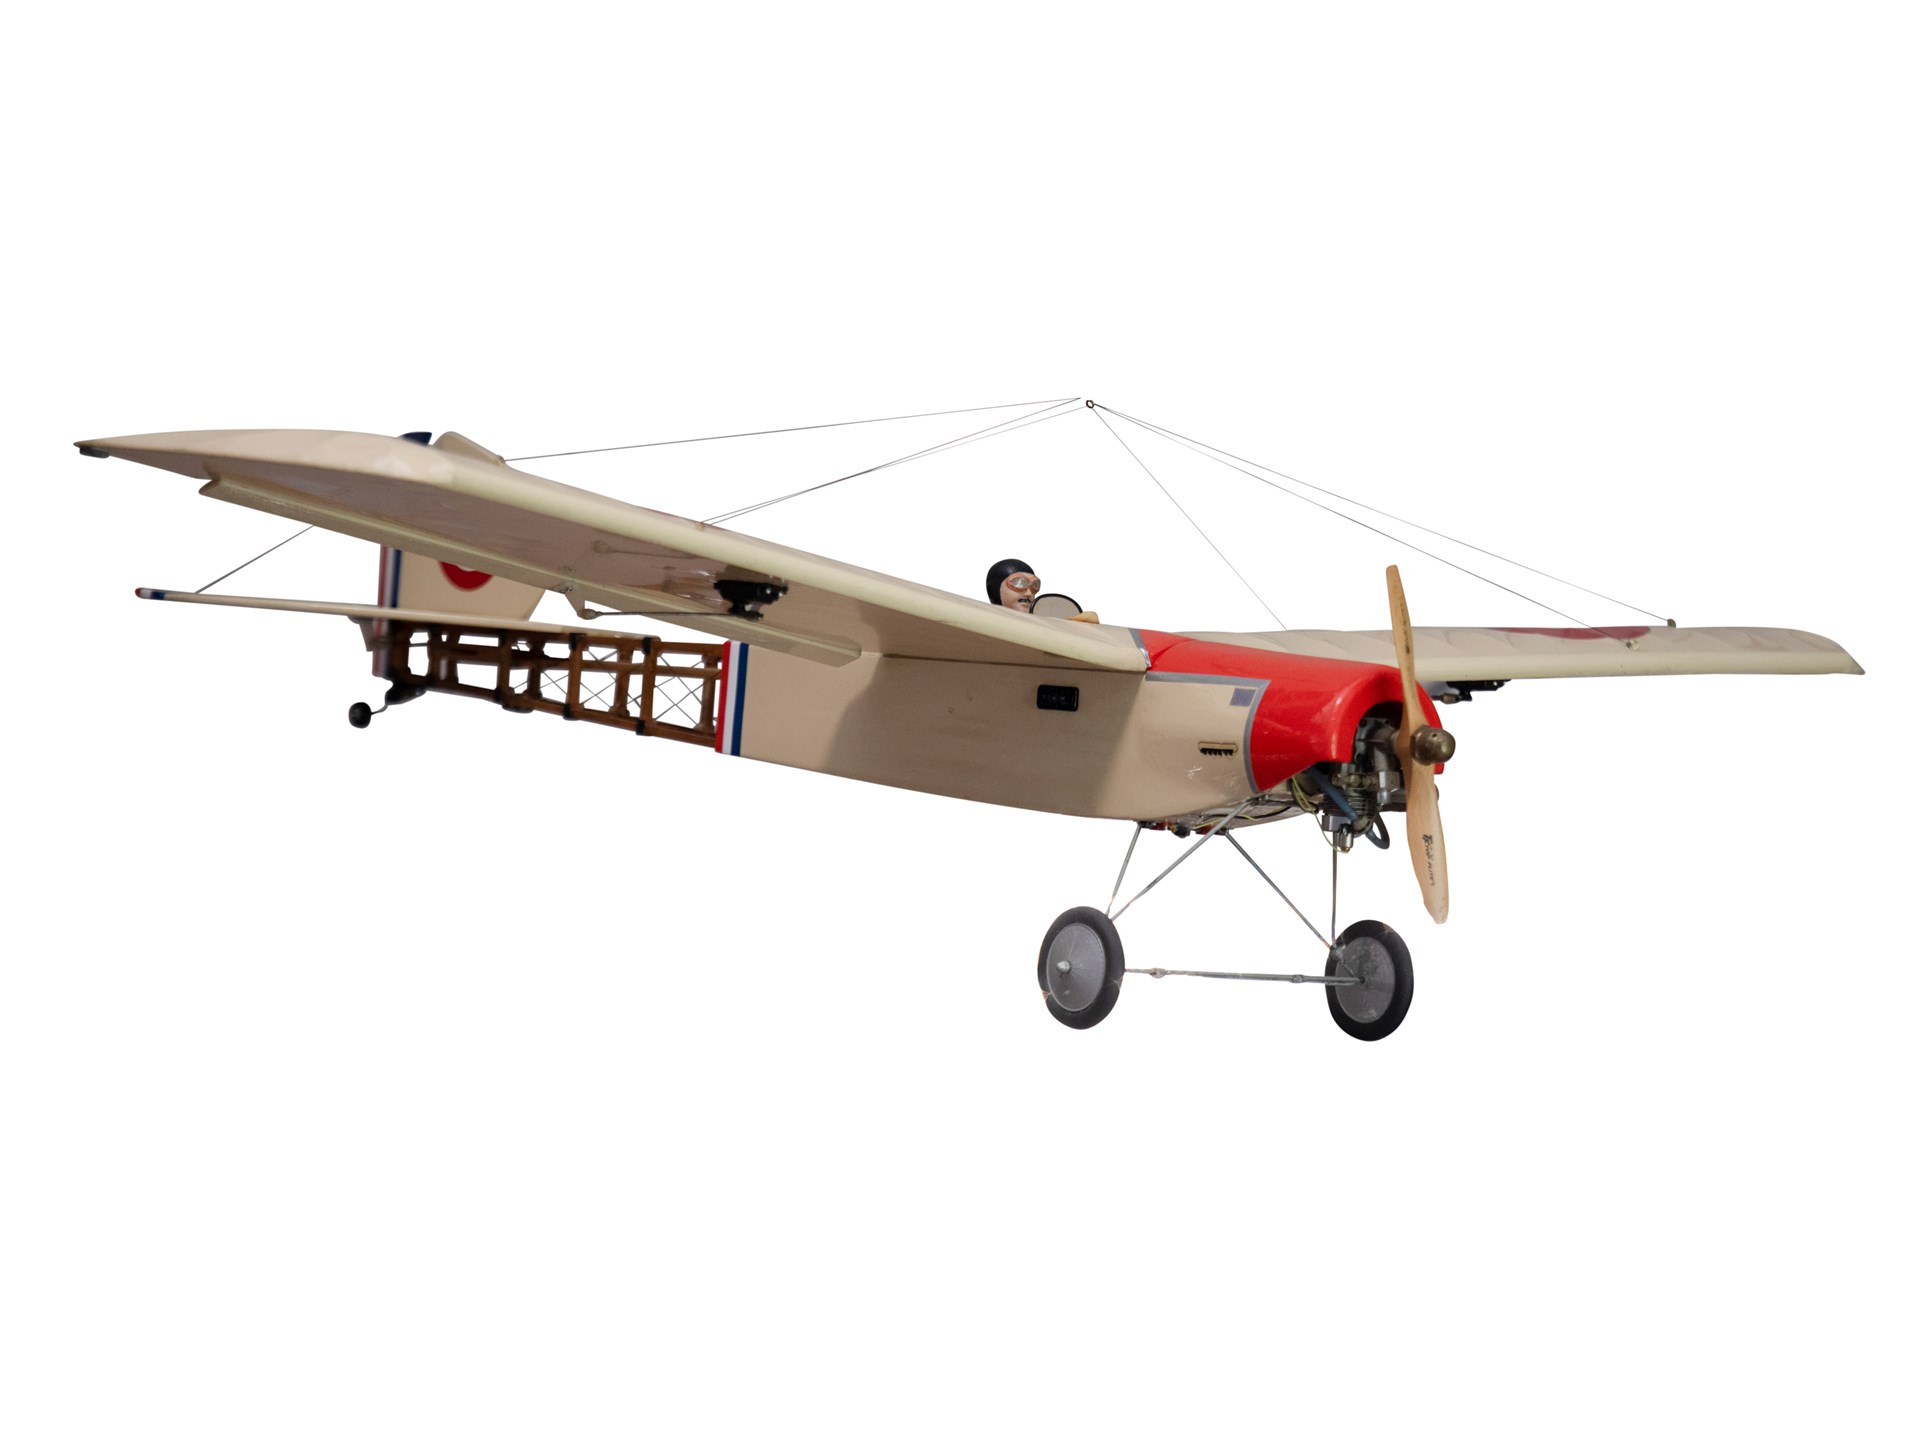 A Ronautique Militaire Morane Saulnier H Model Airplane Gene Ponder